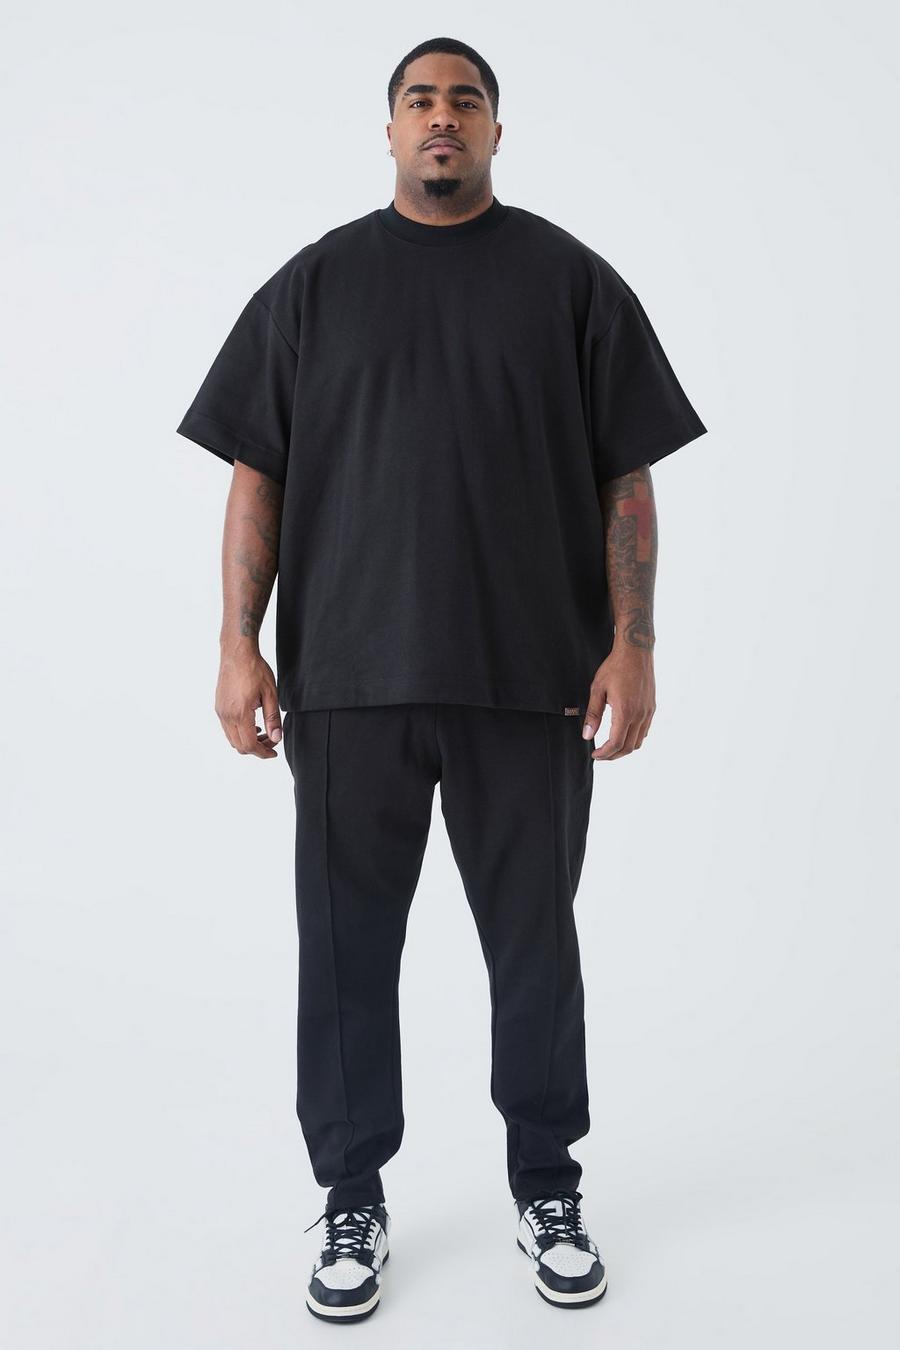 Grande taille - Ensemble oversize avec t-shirt et jogging, Black image number 1